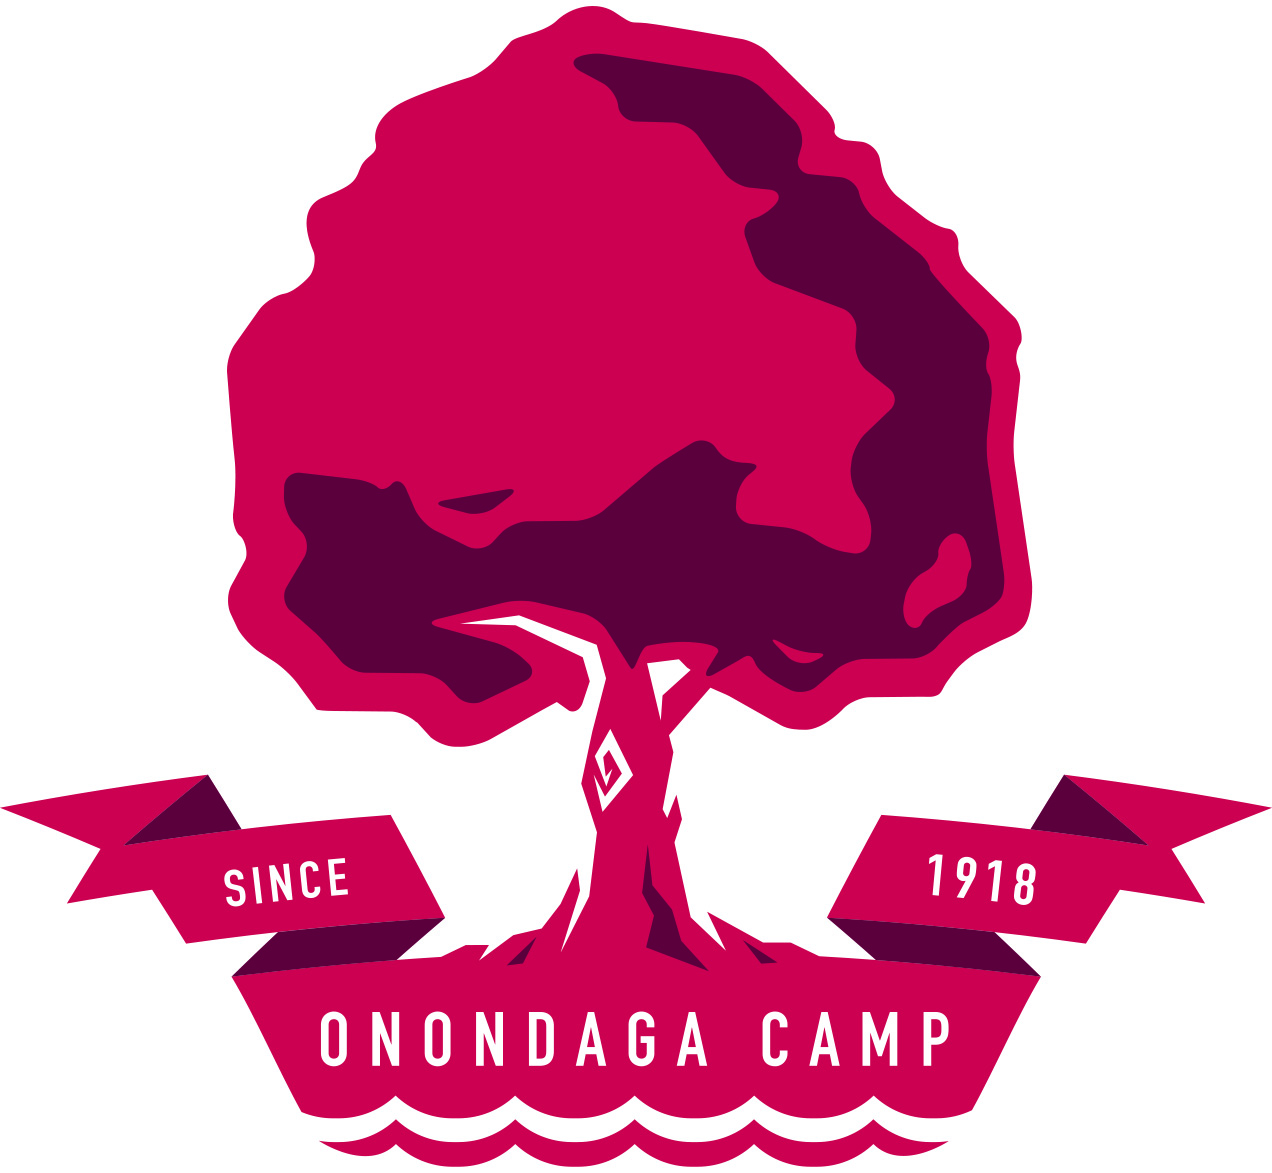 Onondaga Camp logo